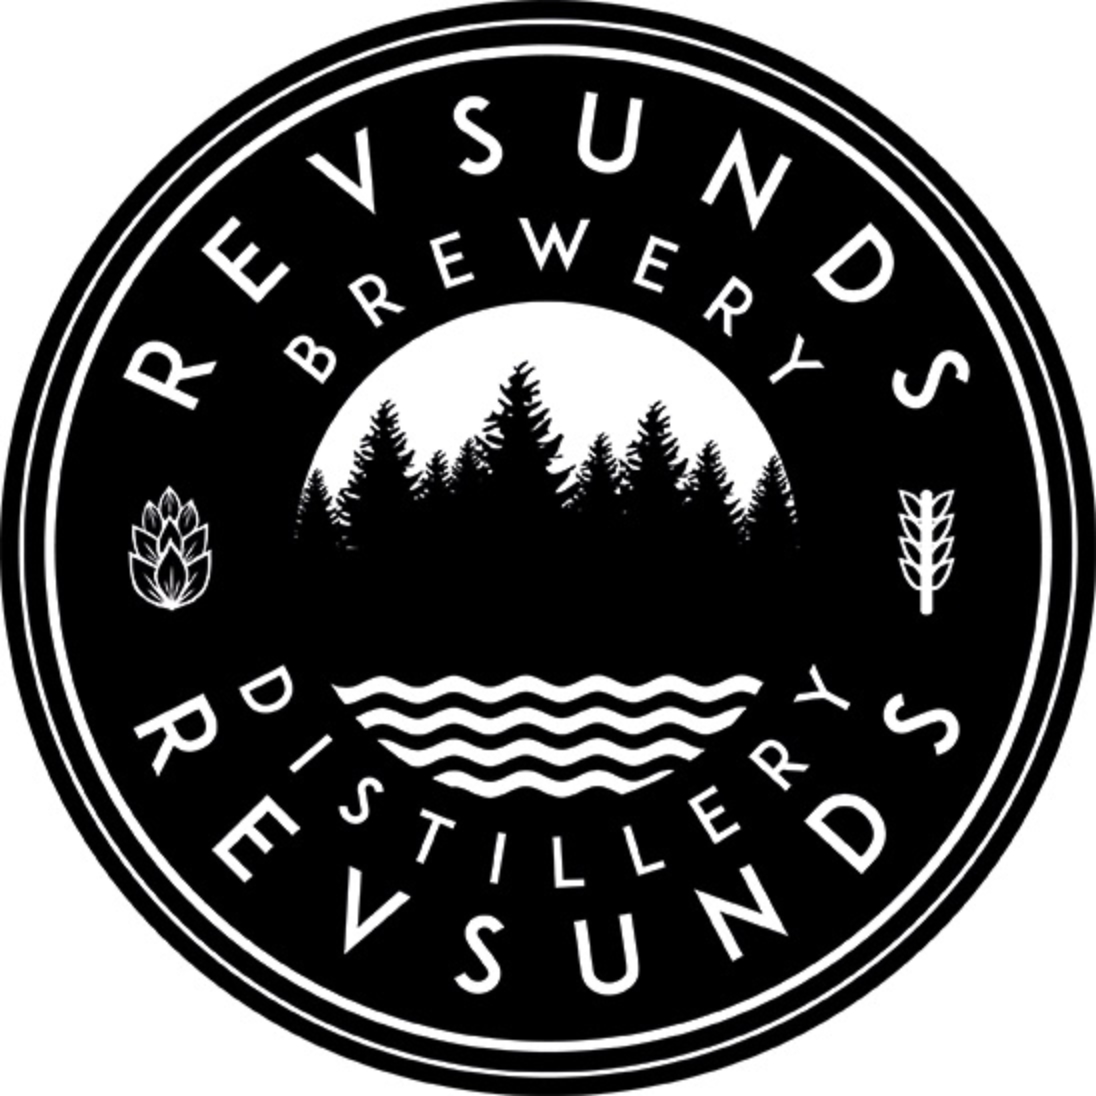 Revsunds Brewery